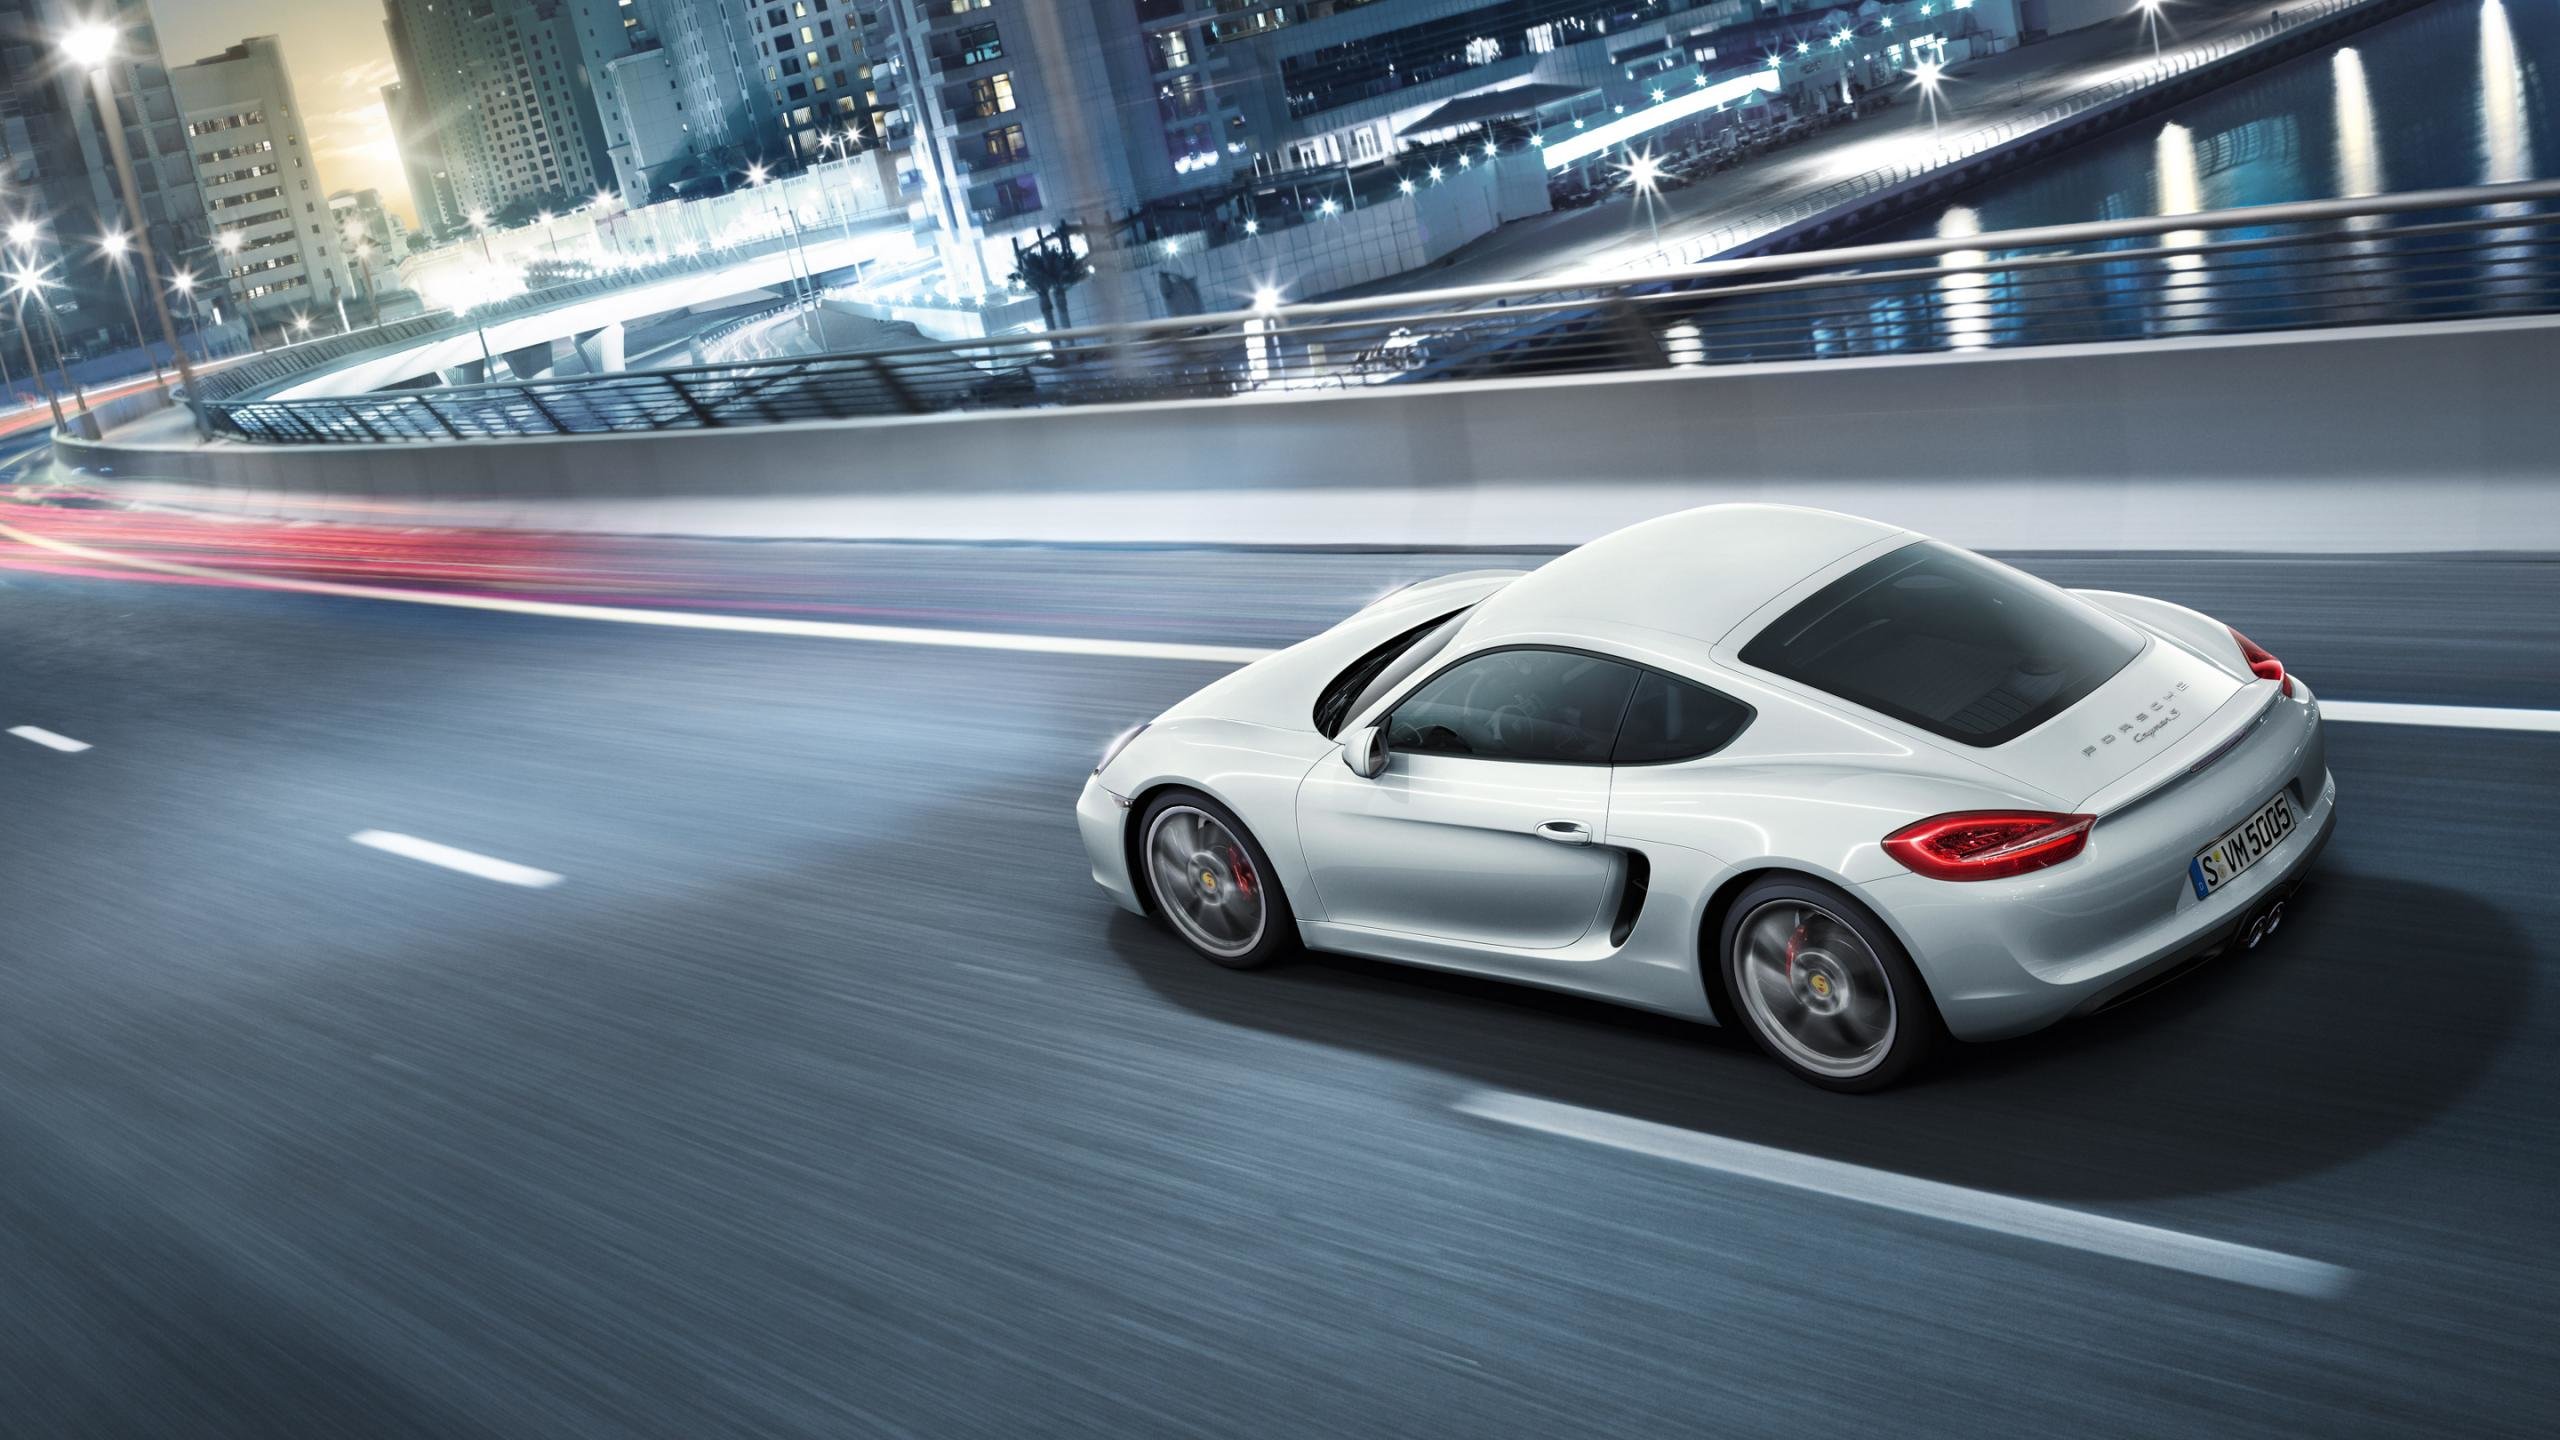 High resolution Porsche Cayman S hd 2560x1440 background ID:365880 for desktop